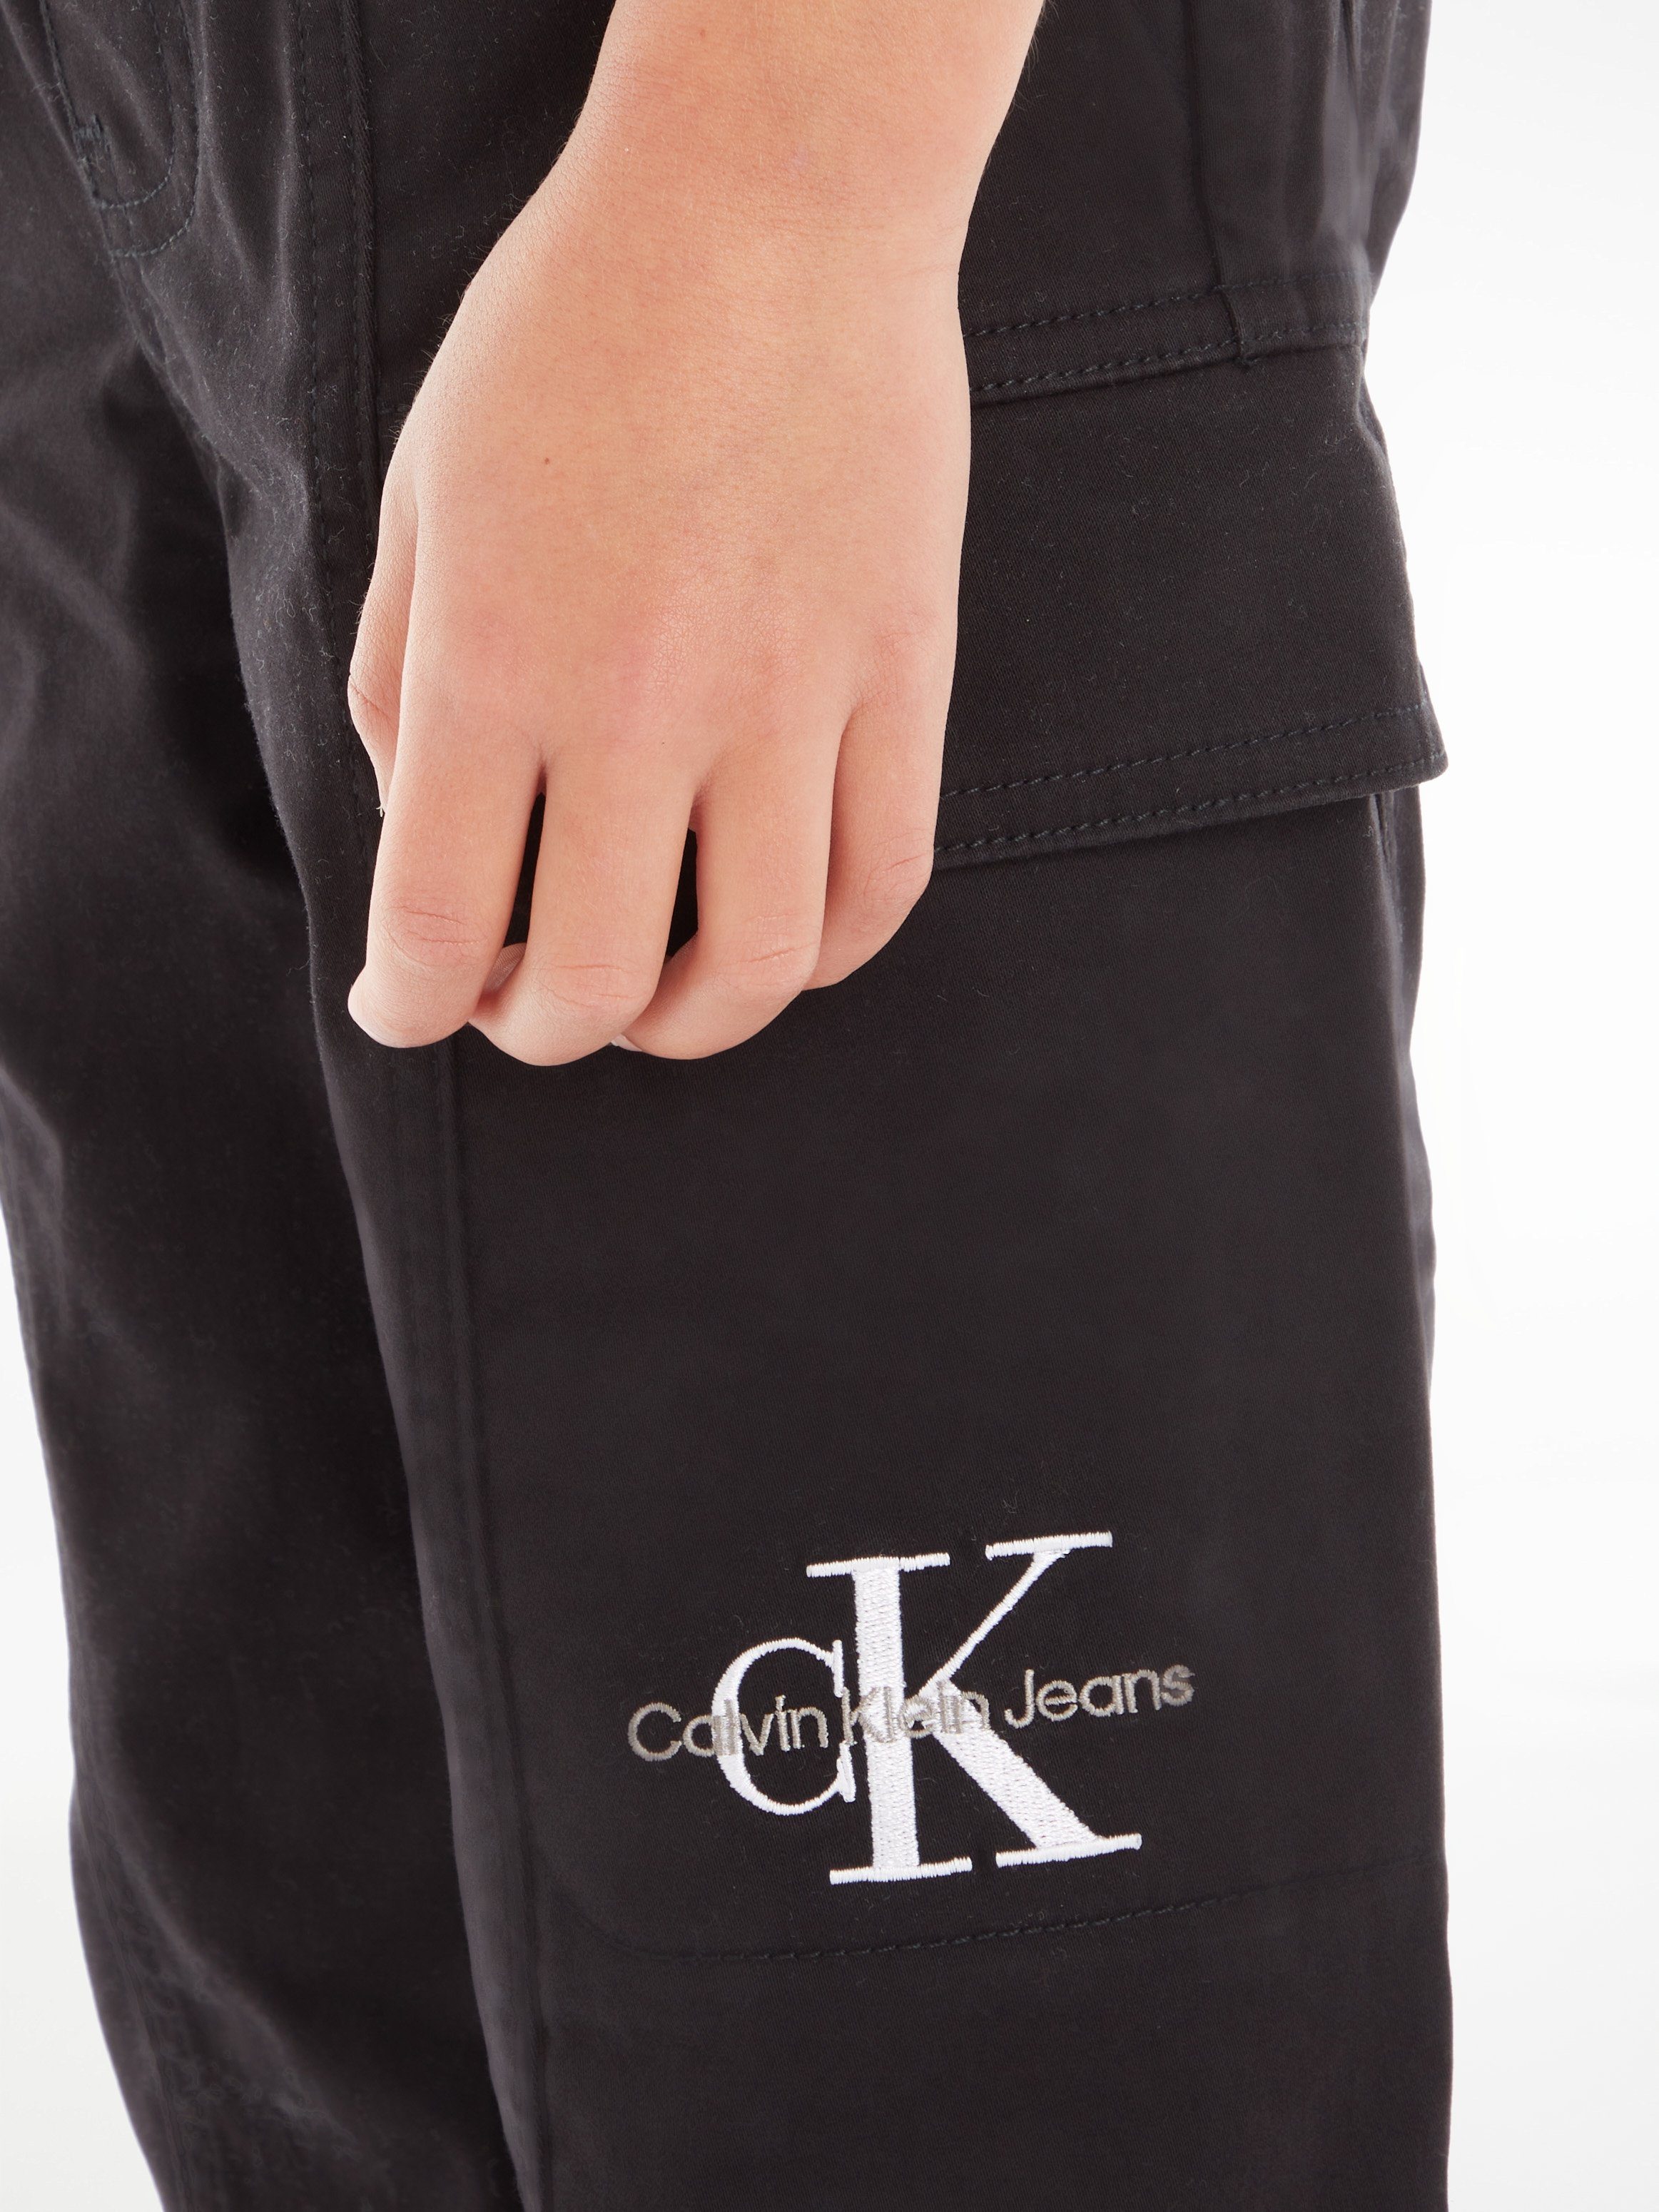 SATEEN PANTS Ck Black Calvin Logoprägung CARGO Klein Cargohose Jeans mit